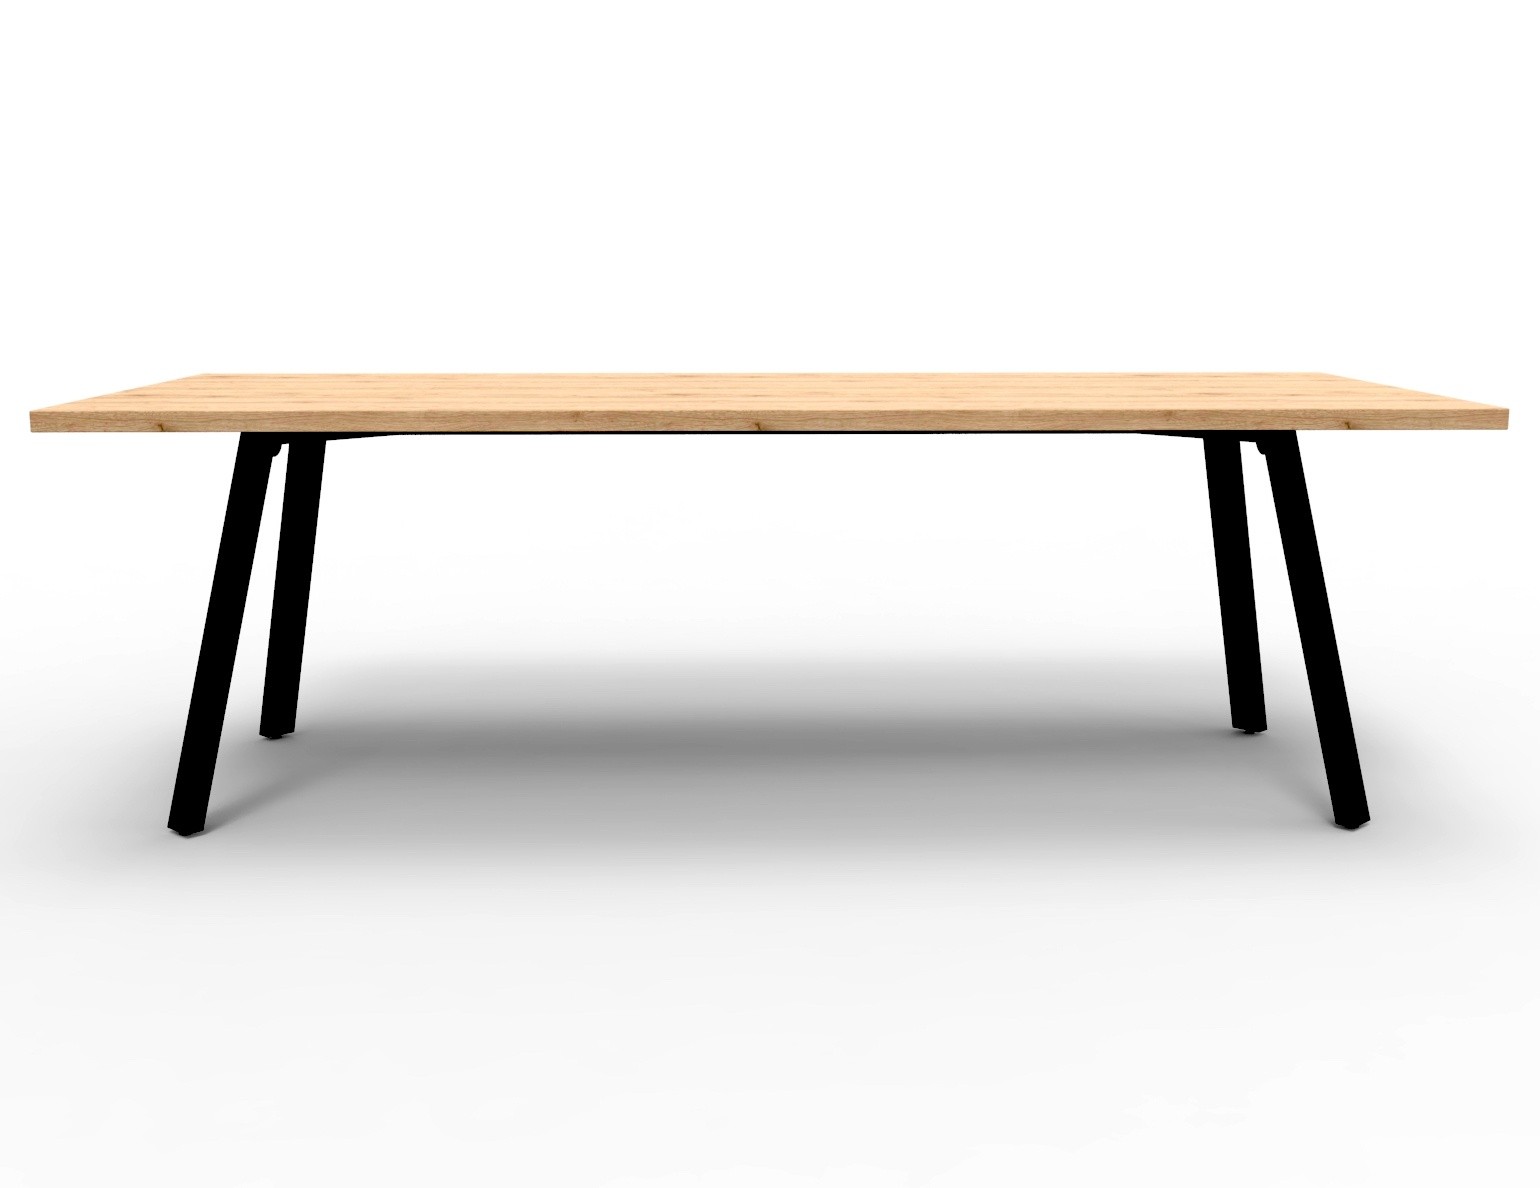 Hawk Dining Table 70cm wide, 160-250cm long